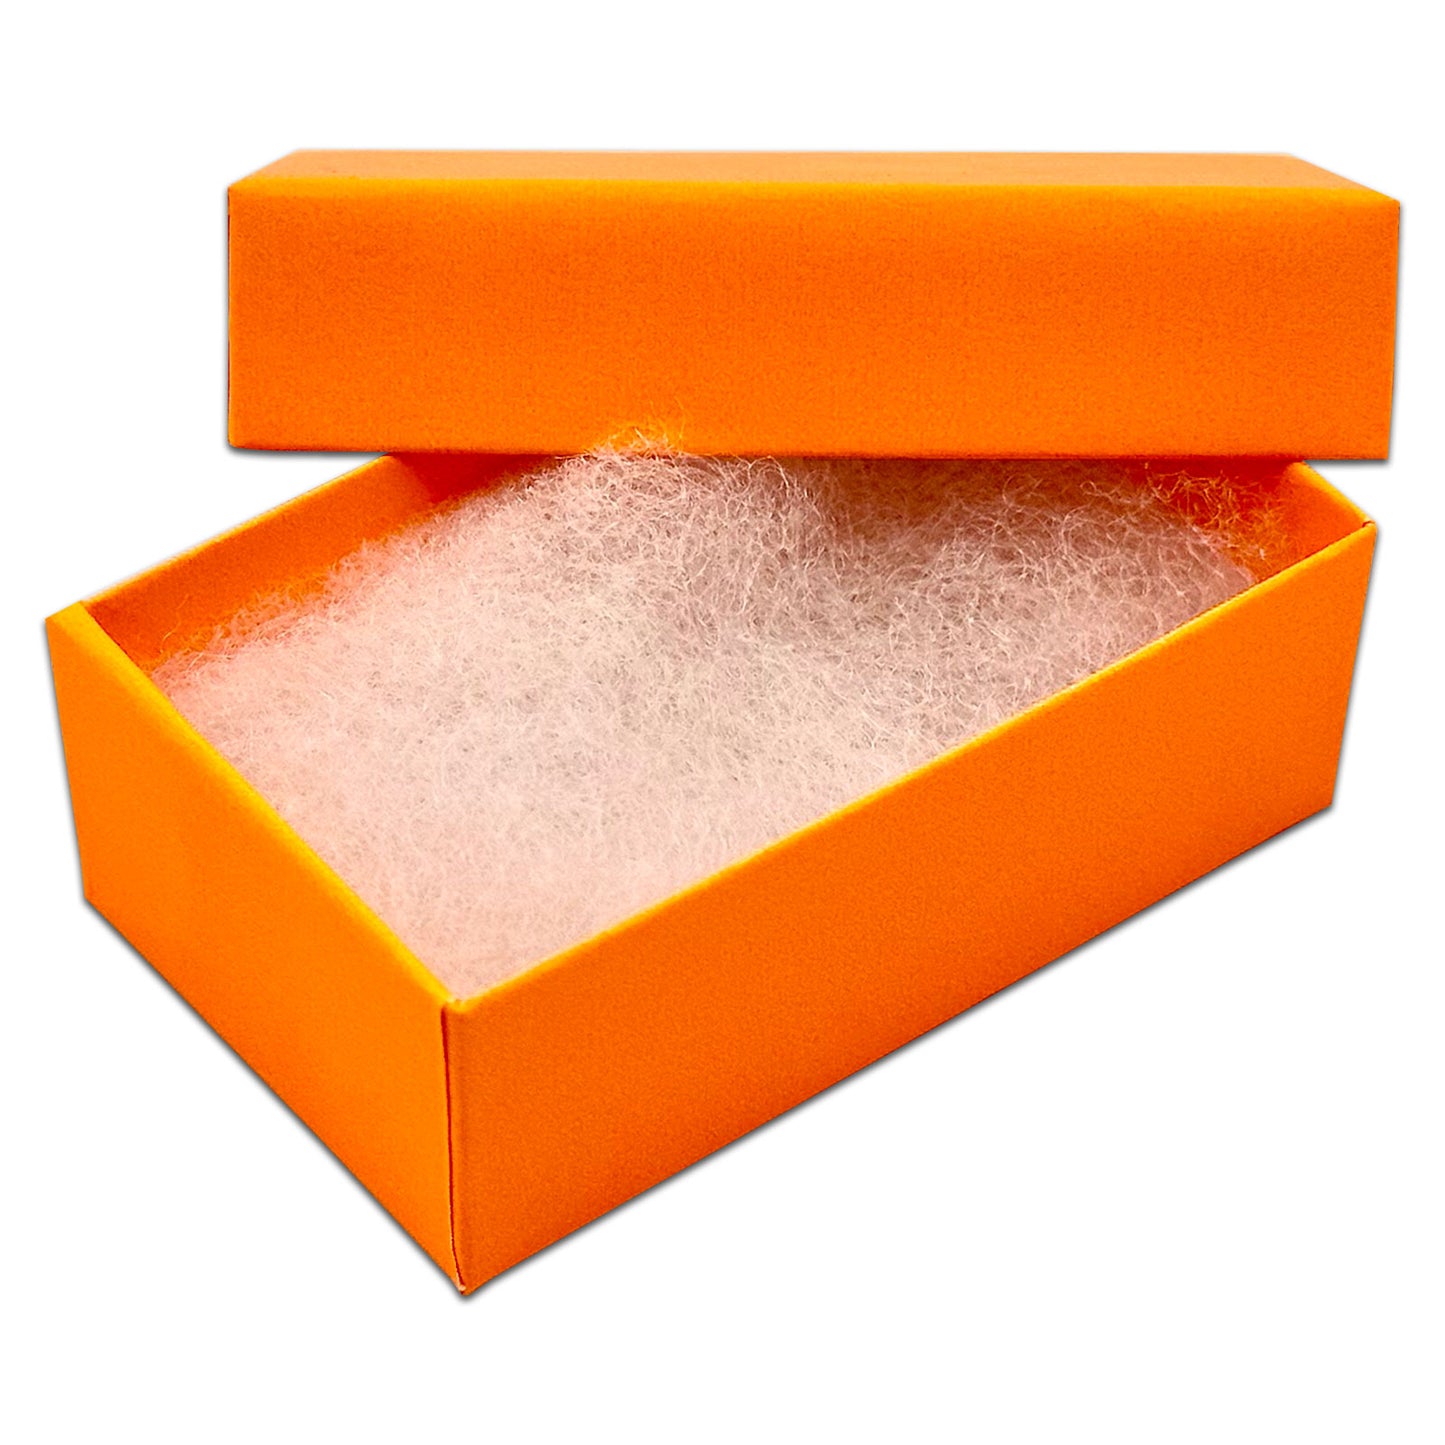 2 5/8" x 1 5/8" x 1" Marigold Cotton Filled Paper Box